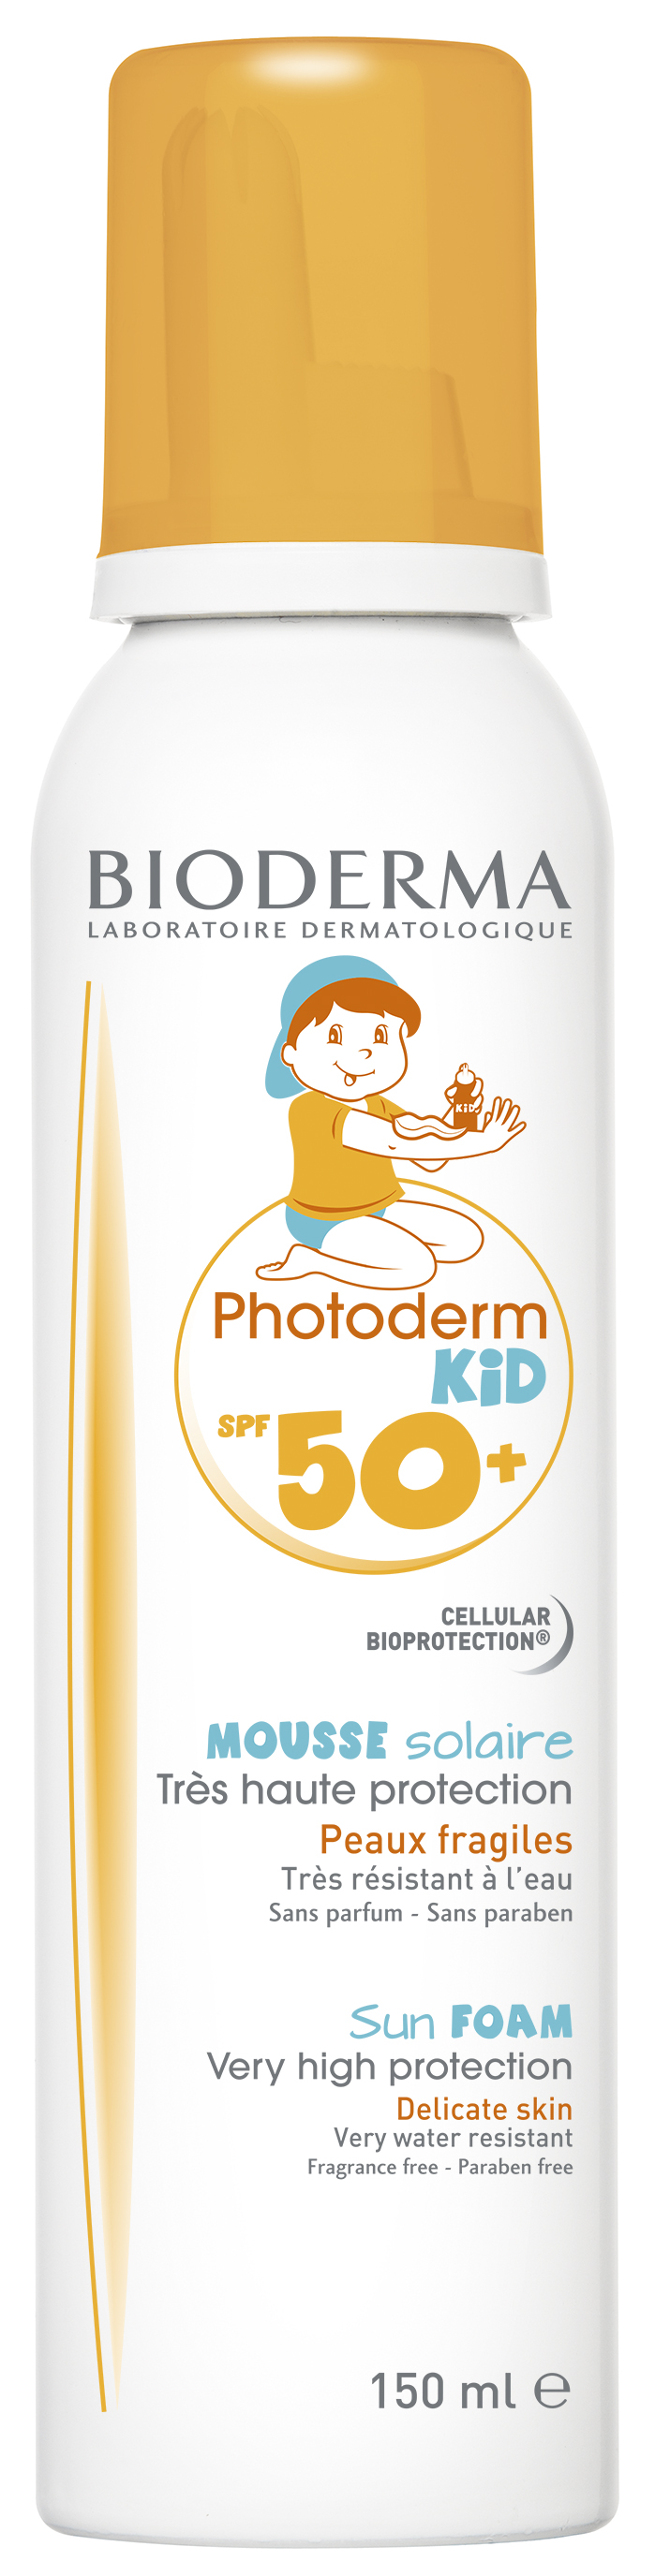 Produse cu SPF pentru copii - Photoderm Kid Spuma Spf50+ 150ml, Bioderma, sinapis.ro